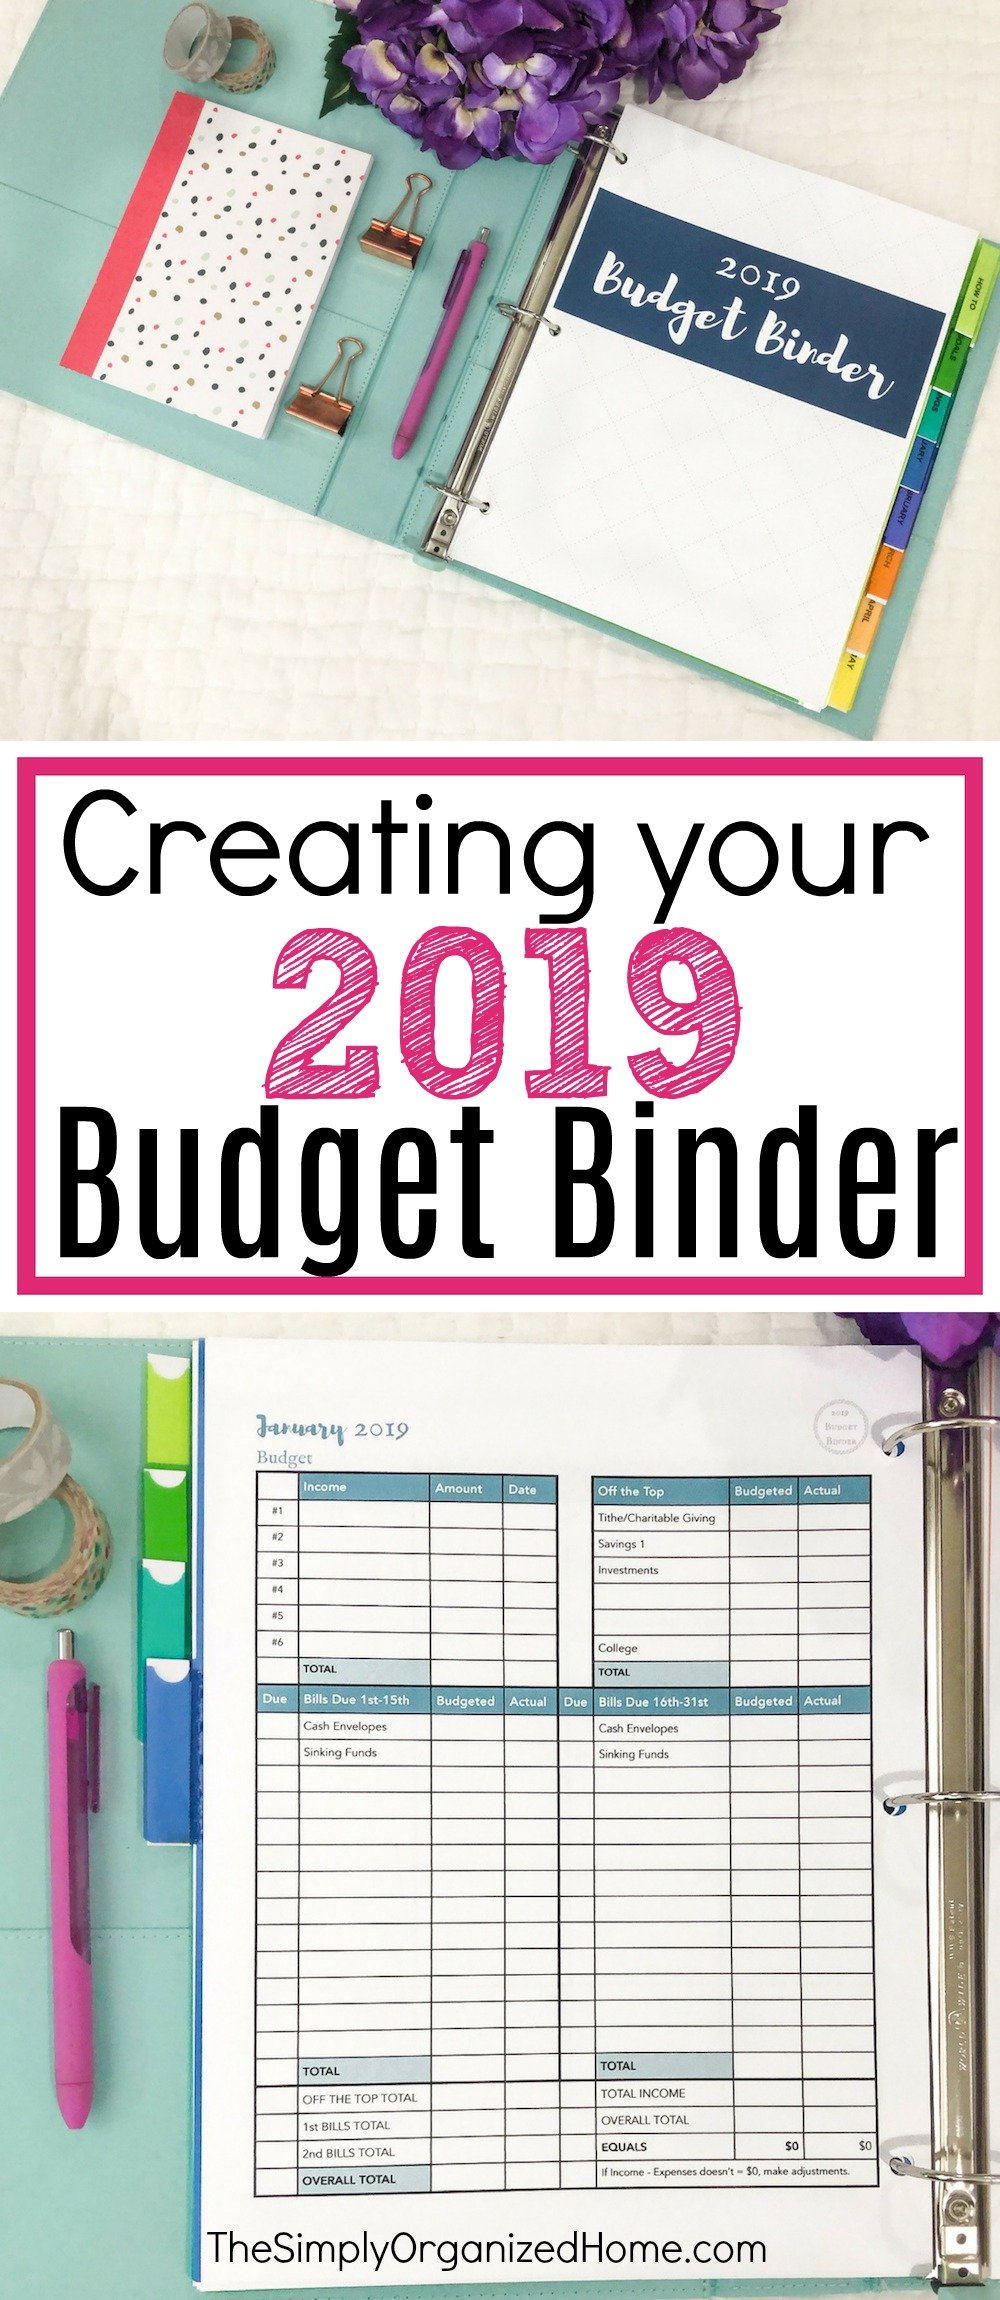 Creating Your 2019 Budget Binder  The Simply Organized Home Regarding Free Printable Budget Binder Worksheets